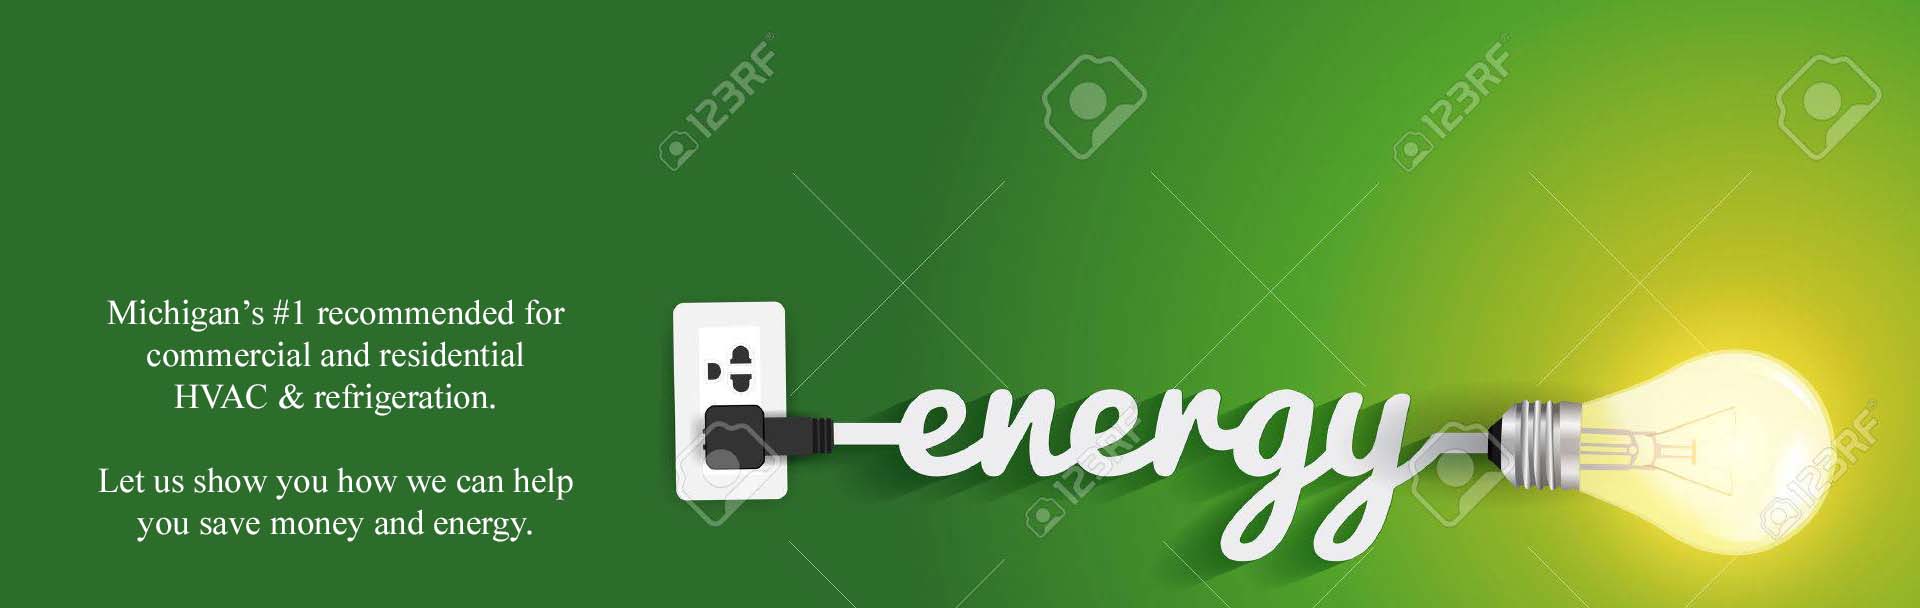 Green Energy image with lightbulb